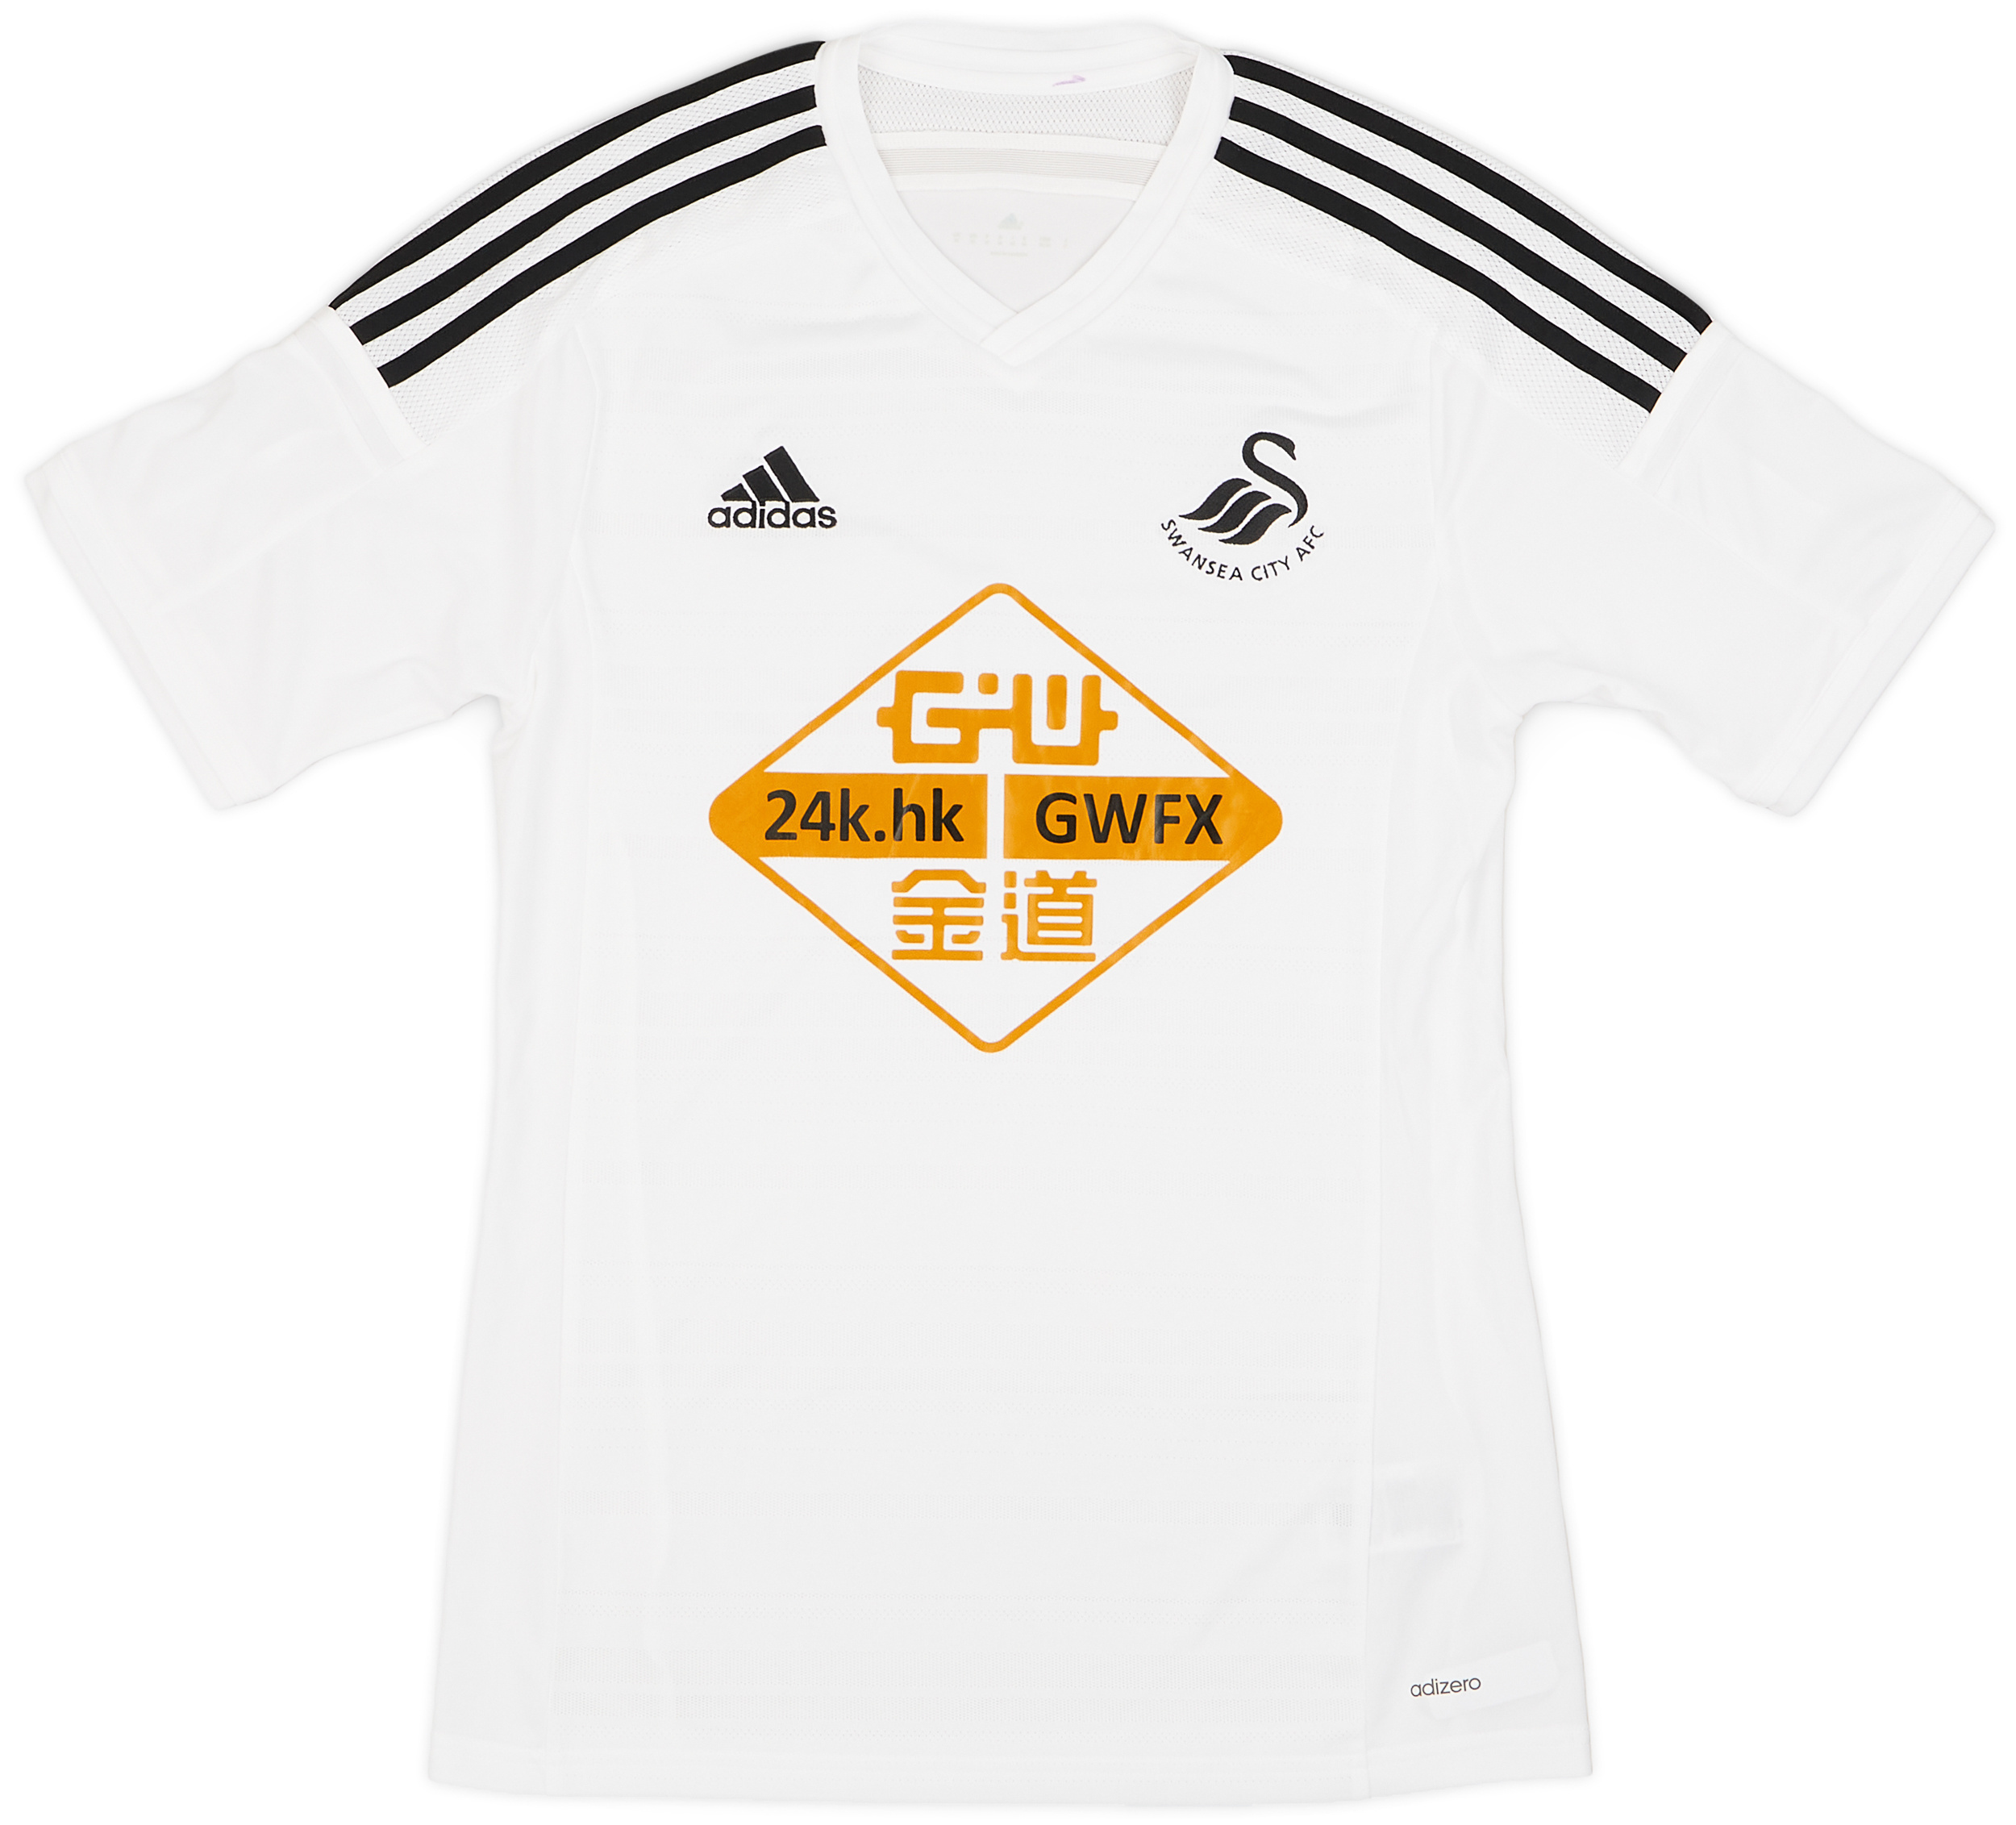 2014-15 Swansea City Home Shirt - 9/10 - ()